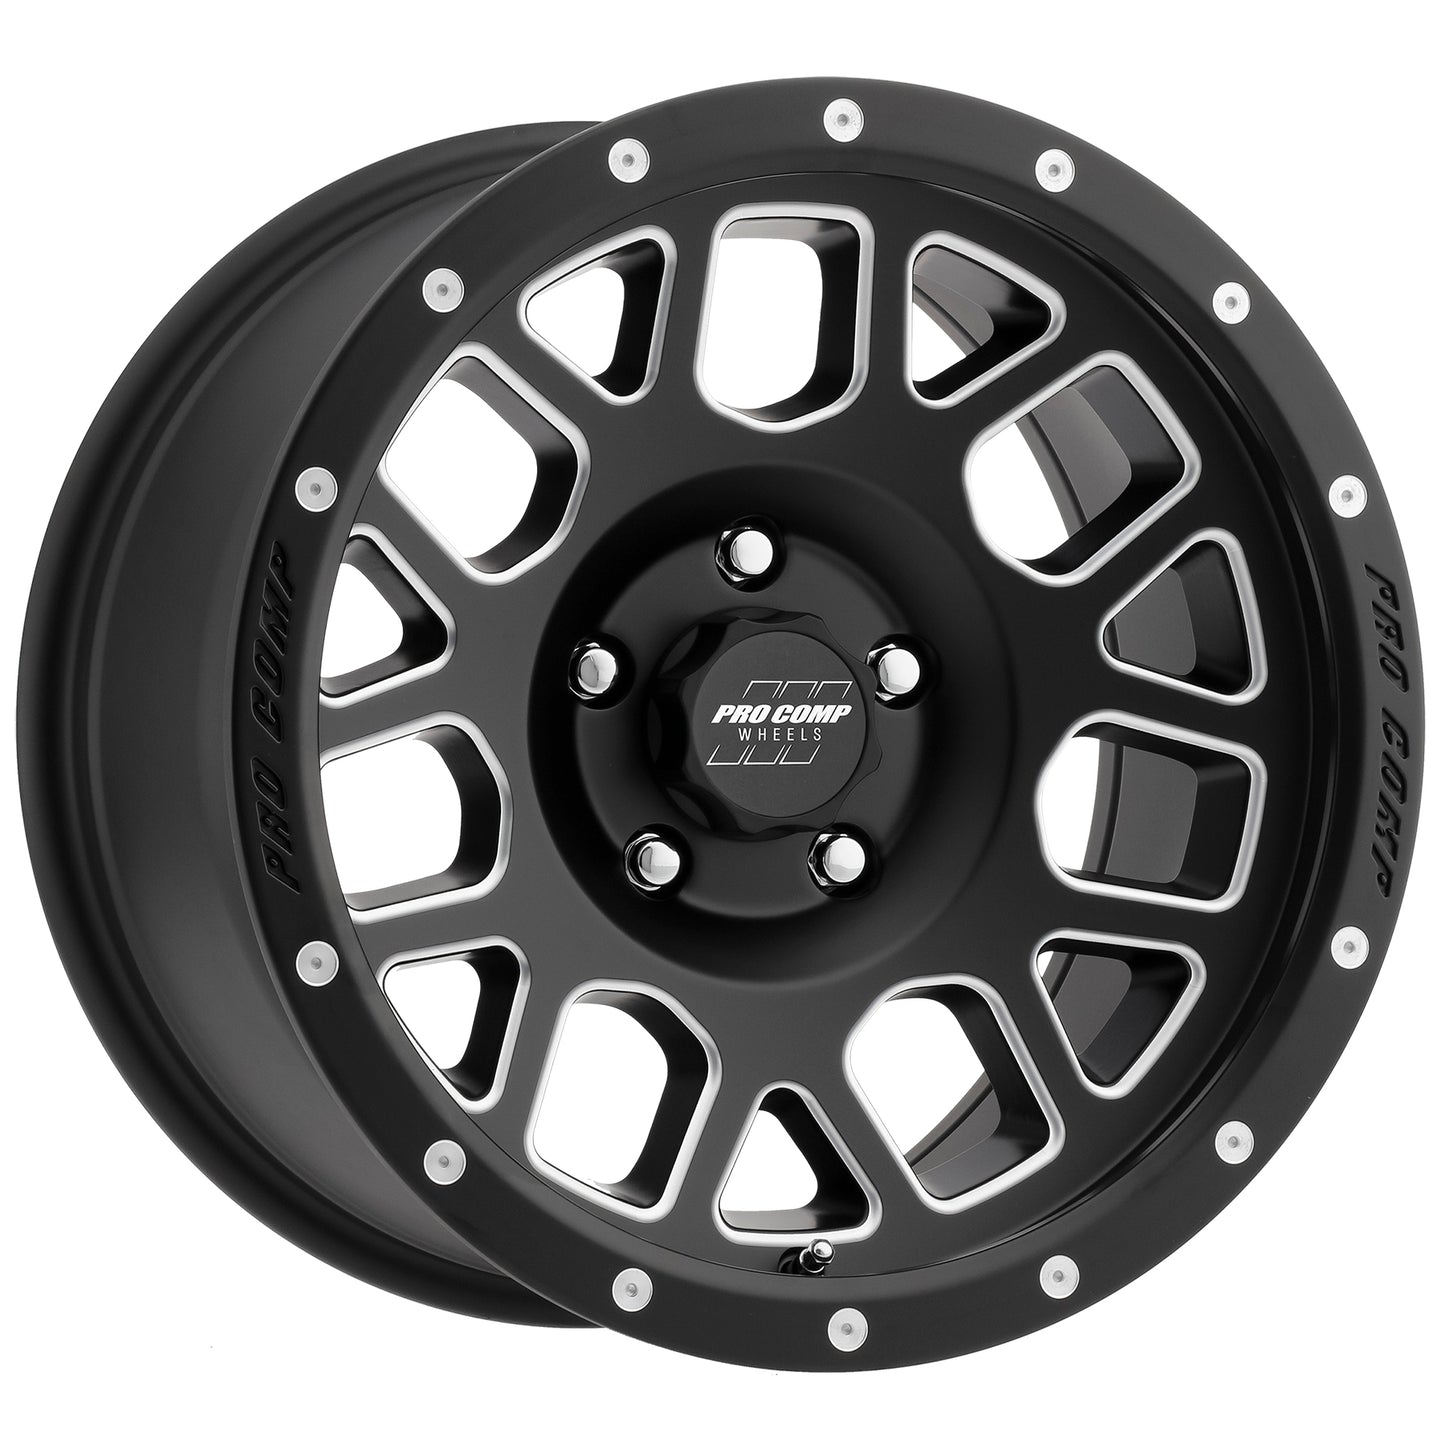 Pro Comp Wheels Vertigo Satin Black Milled 17x9 5x5 4.75BS Offset -6mm Cap P/N 5040556000 5140-7973